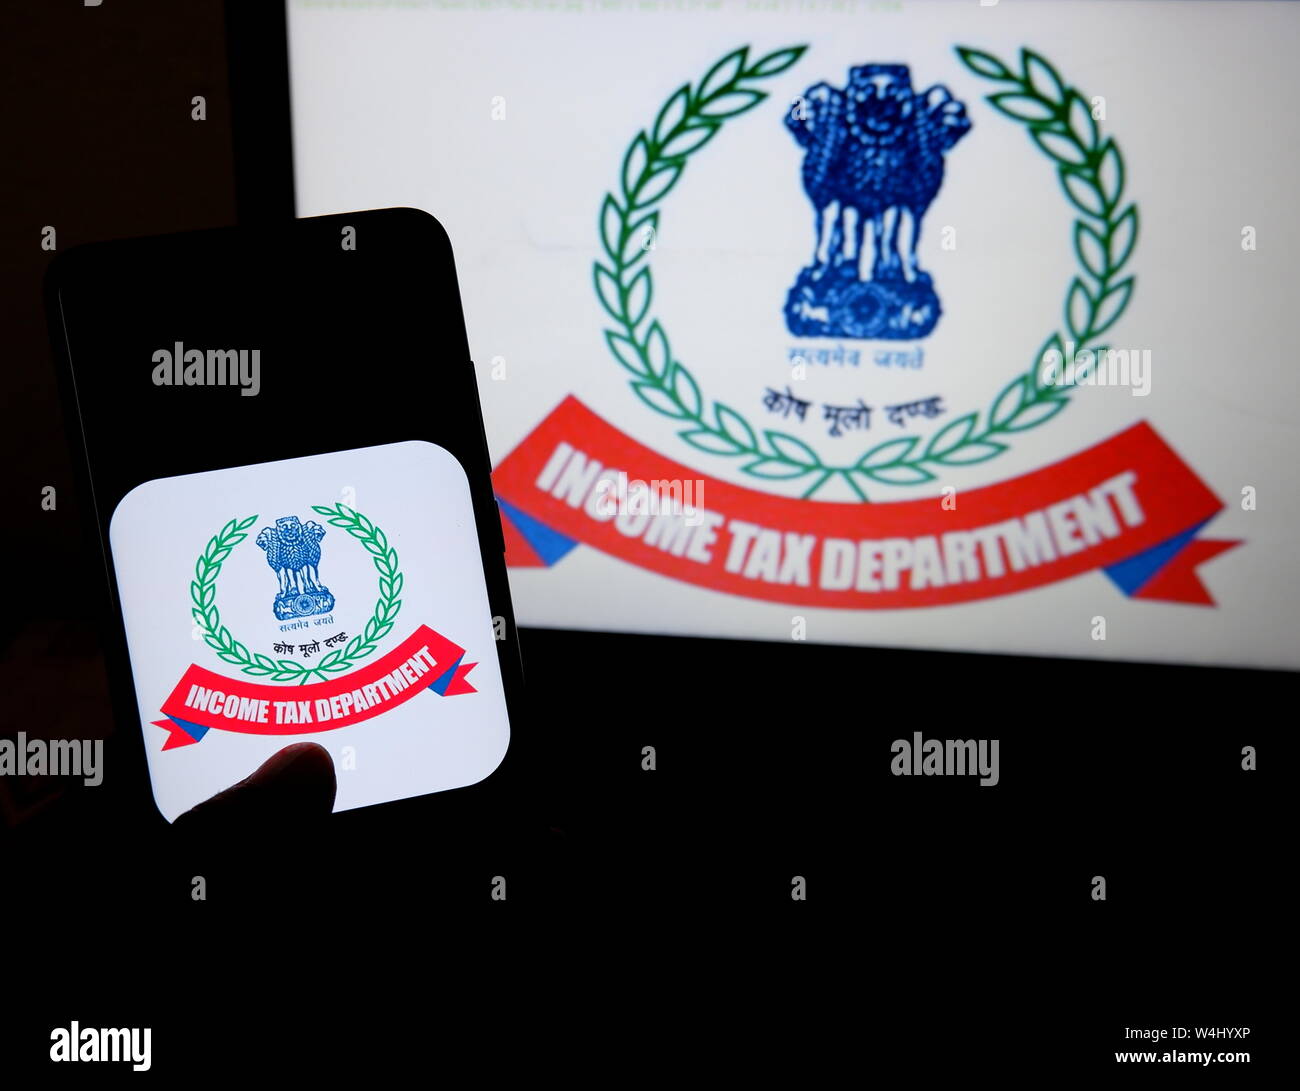 Details more than 61 income tax officer wallpaper - 3tdesign.edu.vn